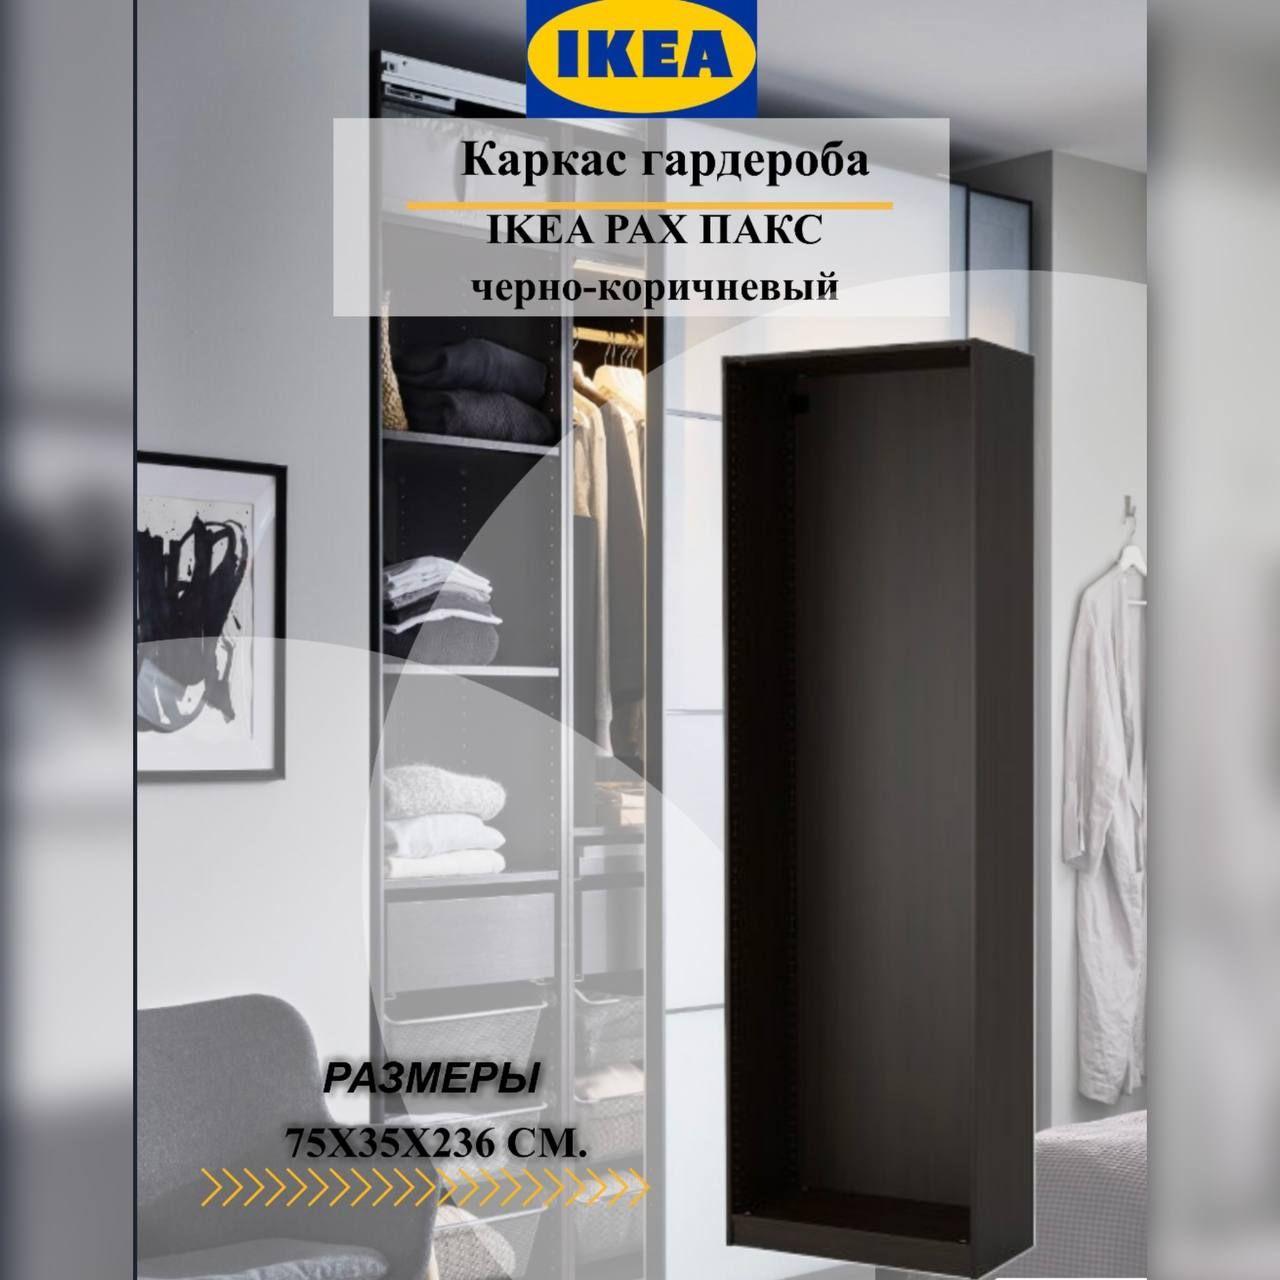 Каркас гардероба IKEA PAX ПАКС, 75X35X236 см, черно-коричневый